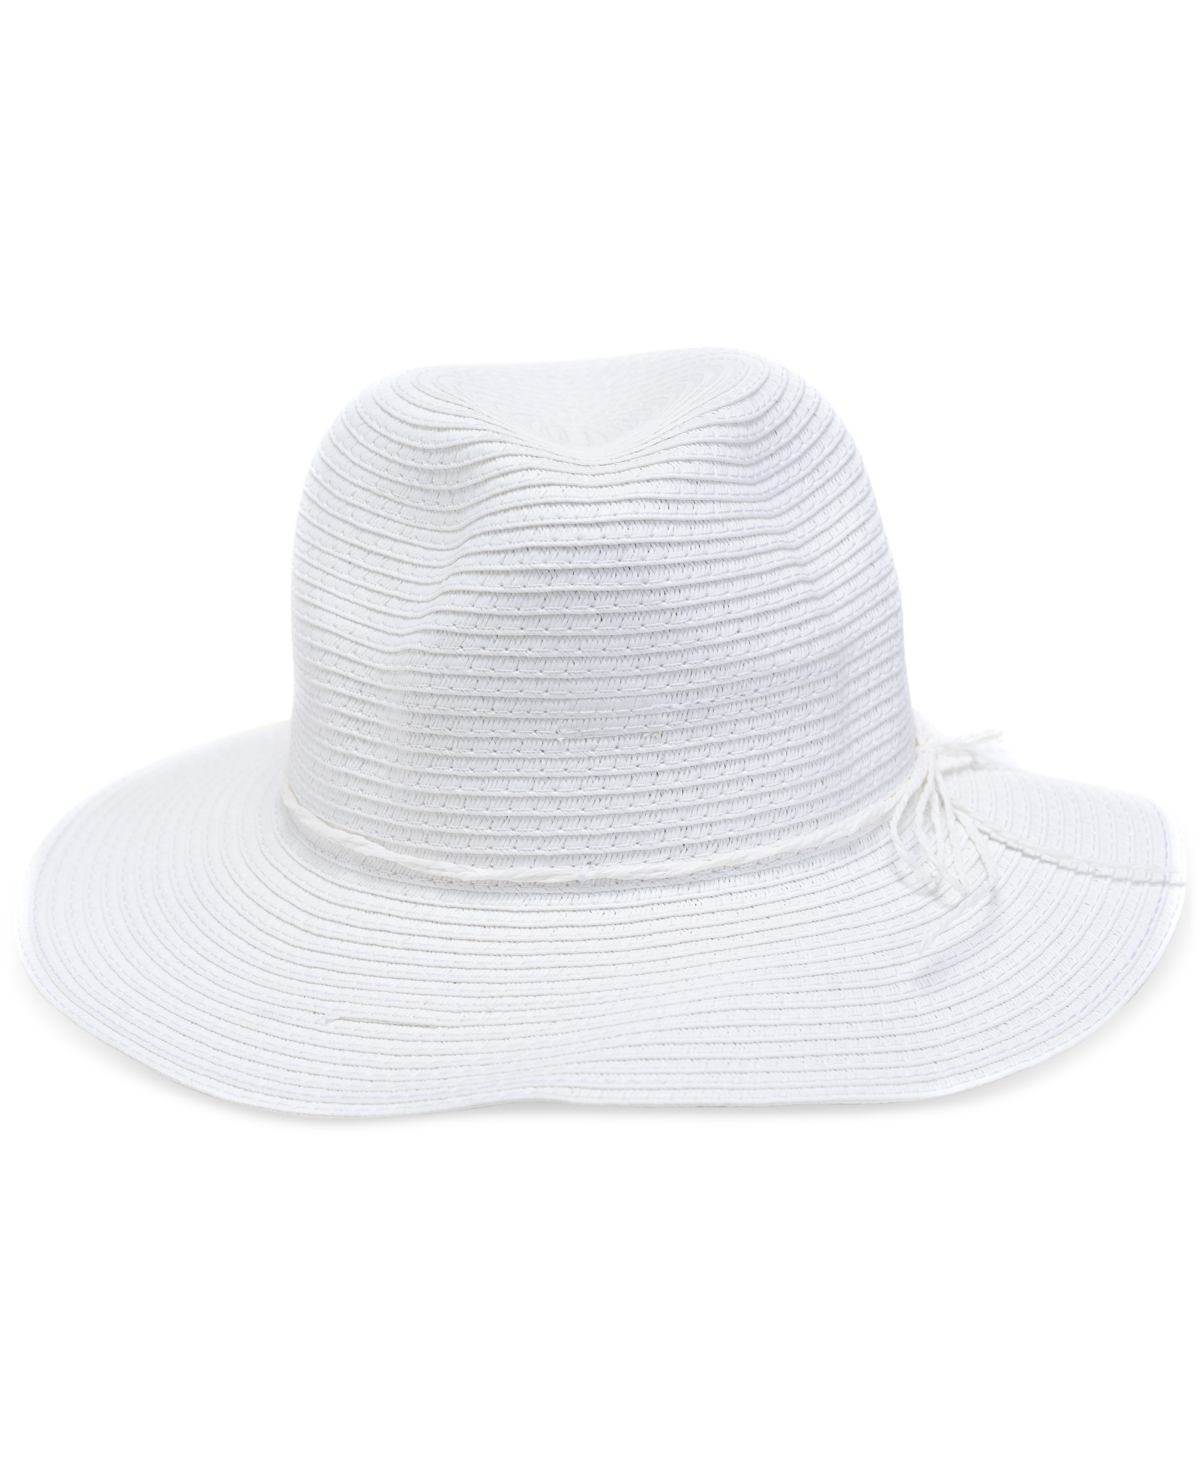 Style & Co Basic Straw Panama Hat In White